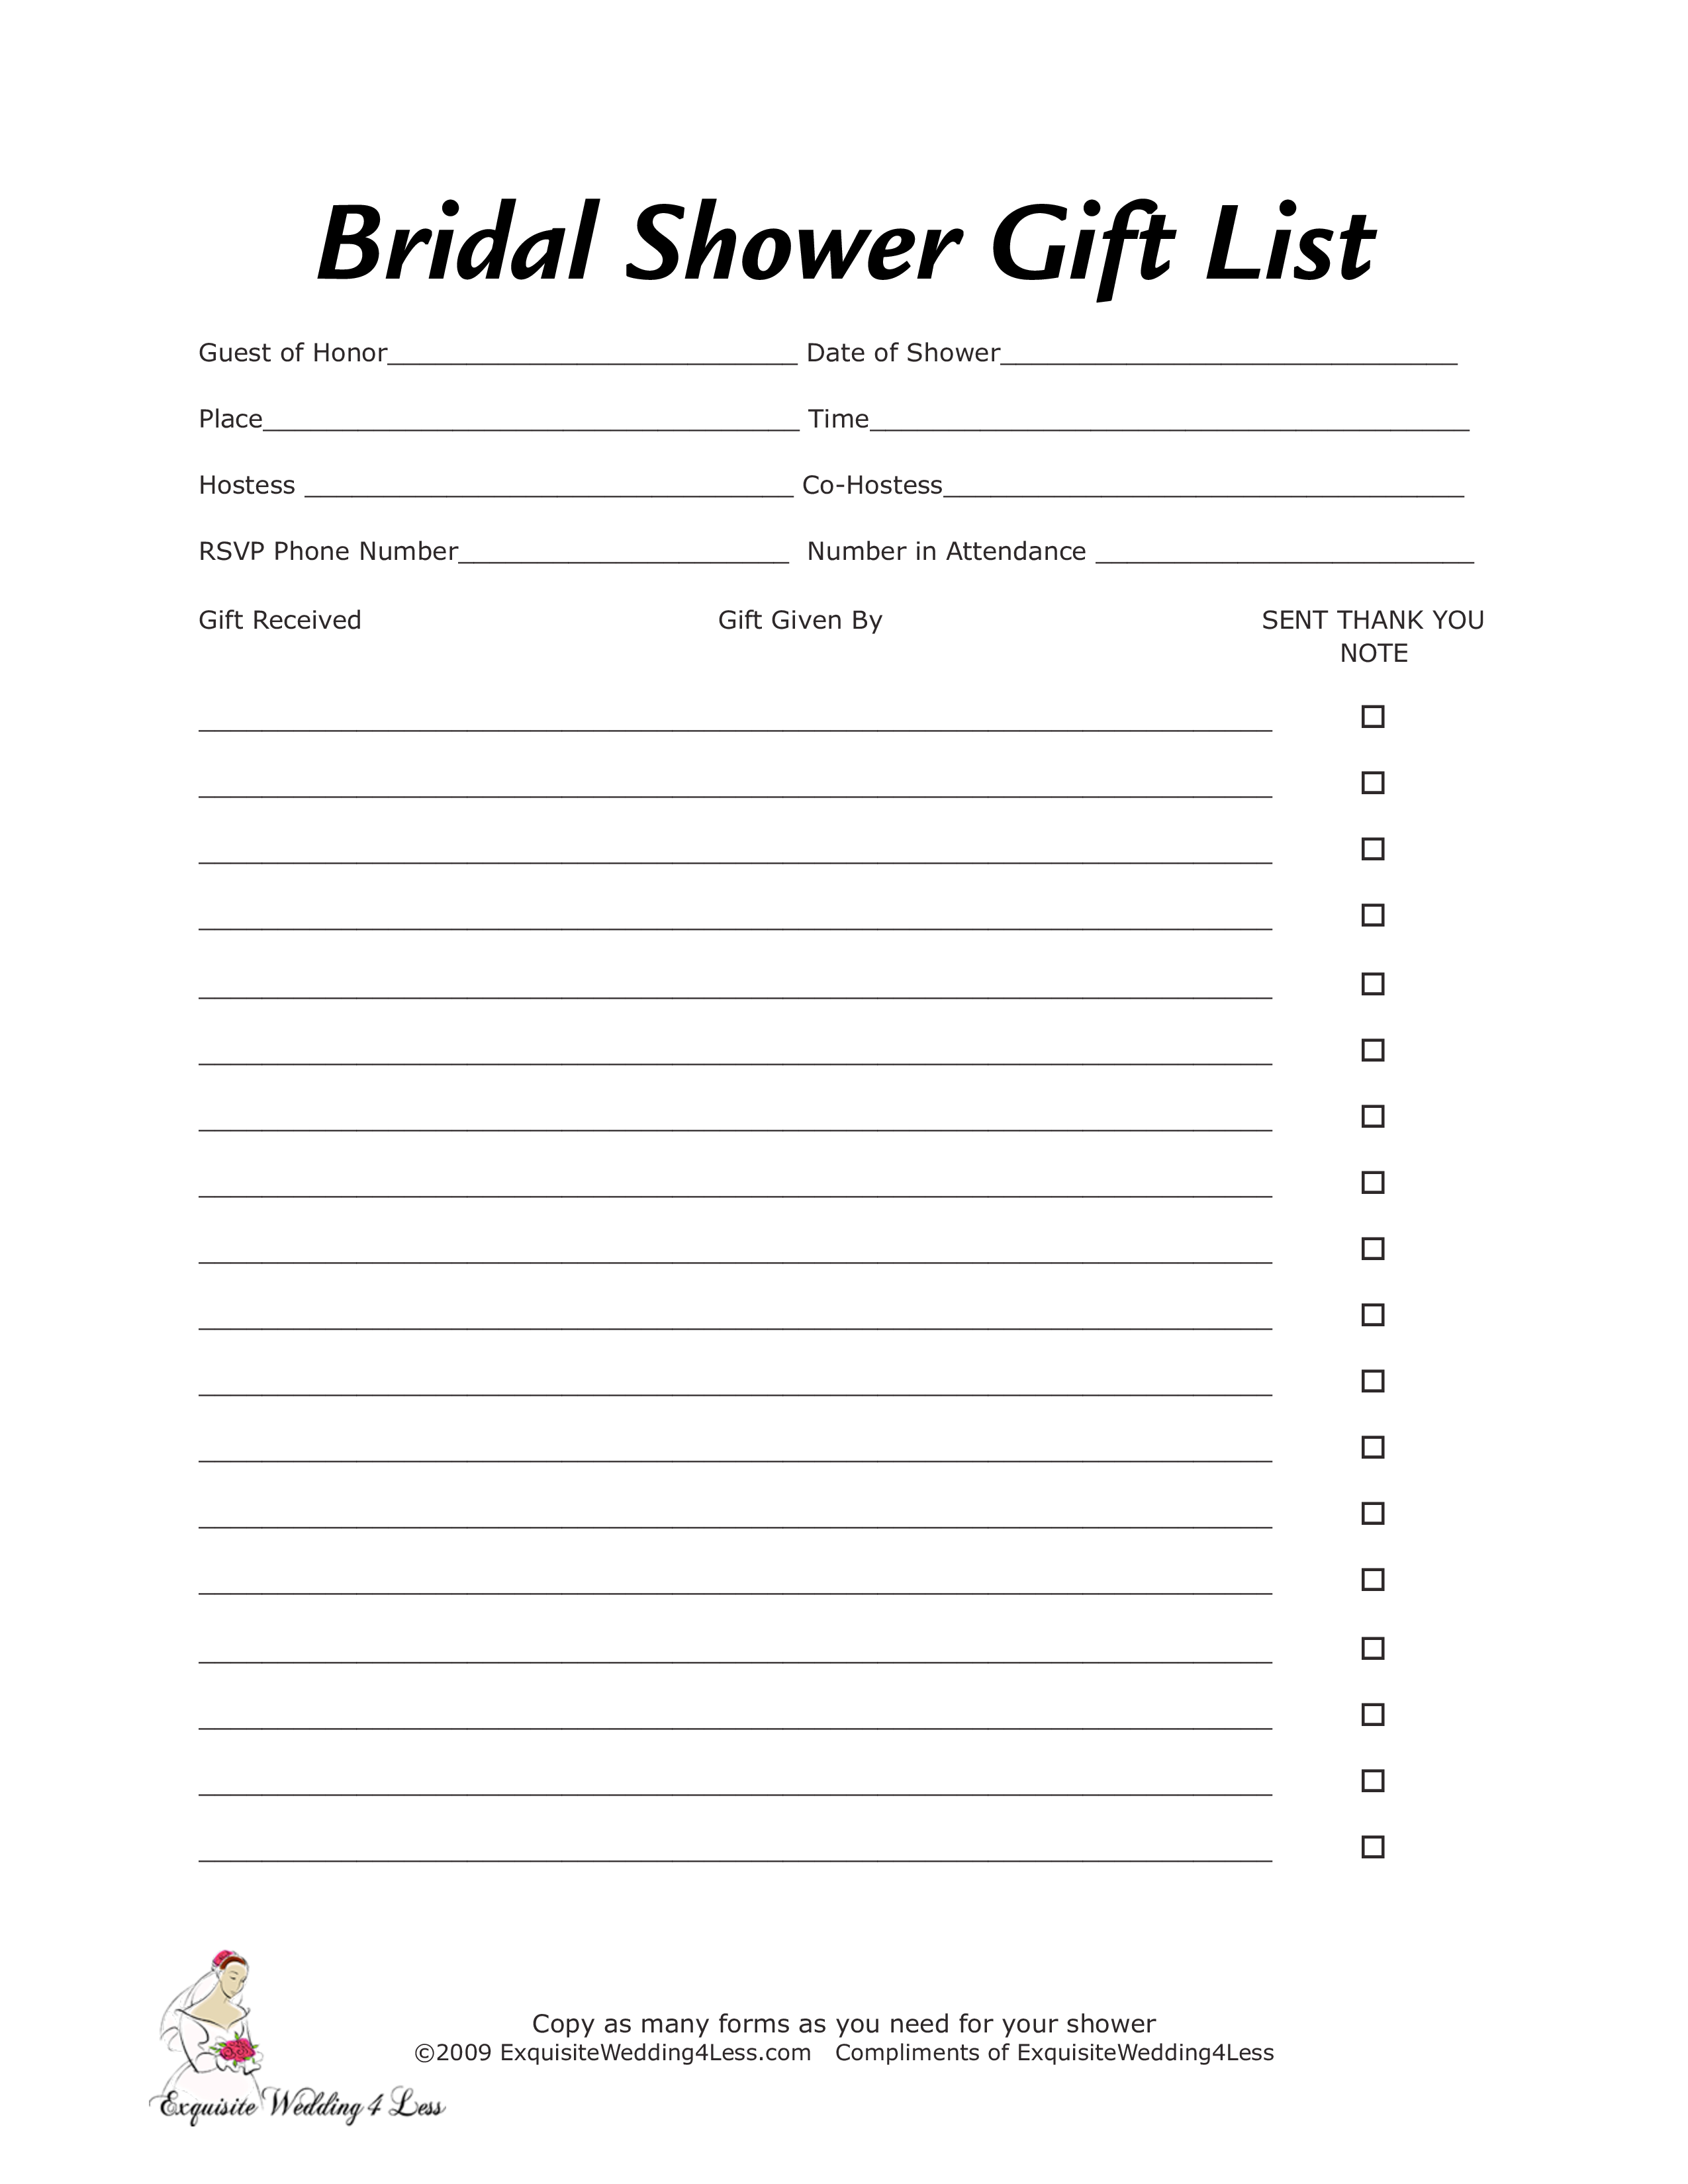 Bridal Shower Gift List Templates At Allbusinesstemplates Com